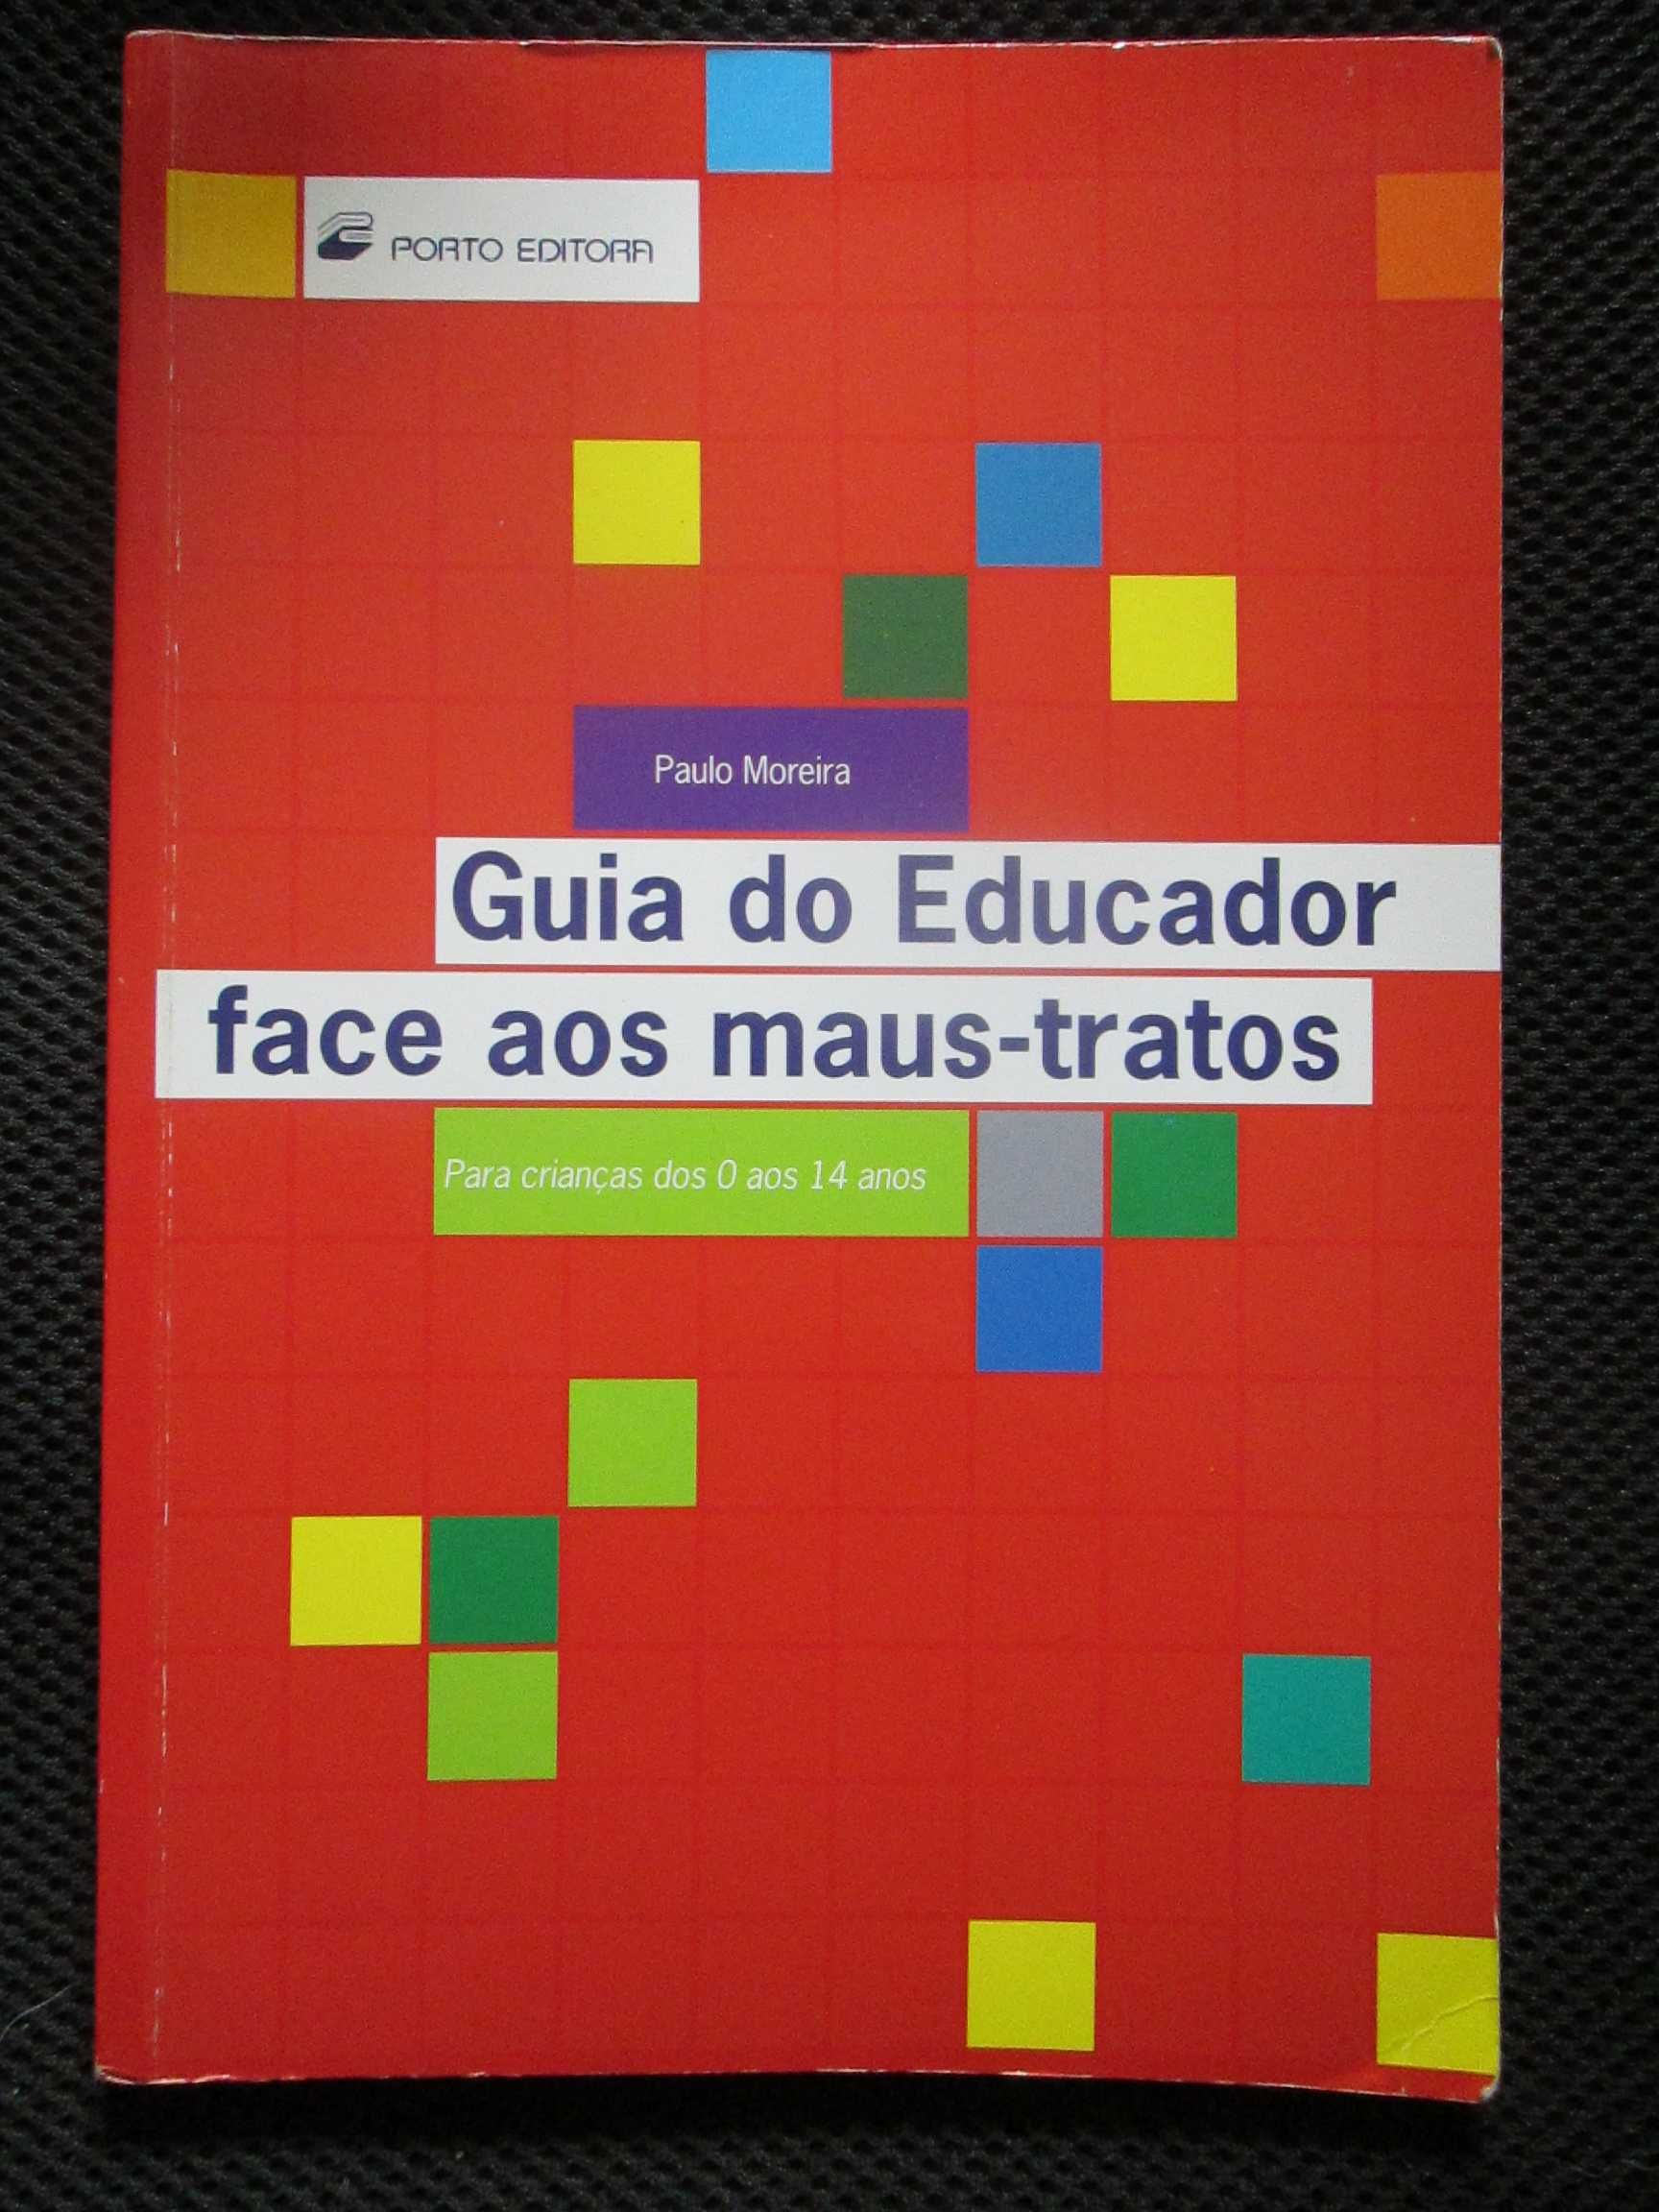 O Guia do Educador Face aos Maus-tratos, de Paulo Moreira